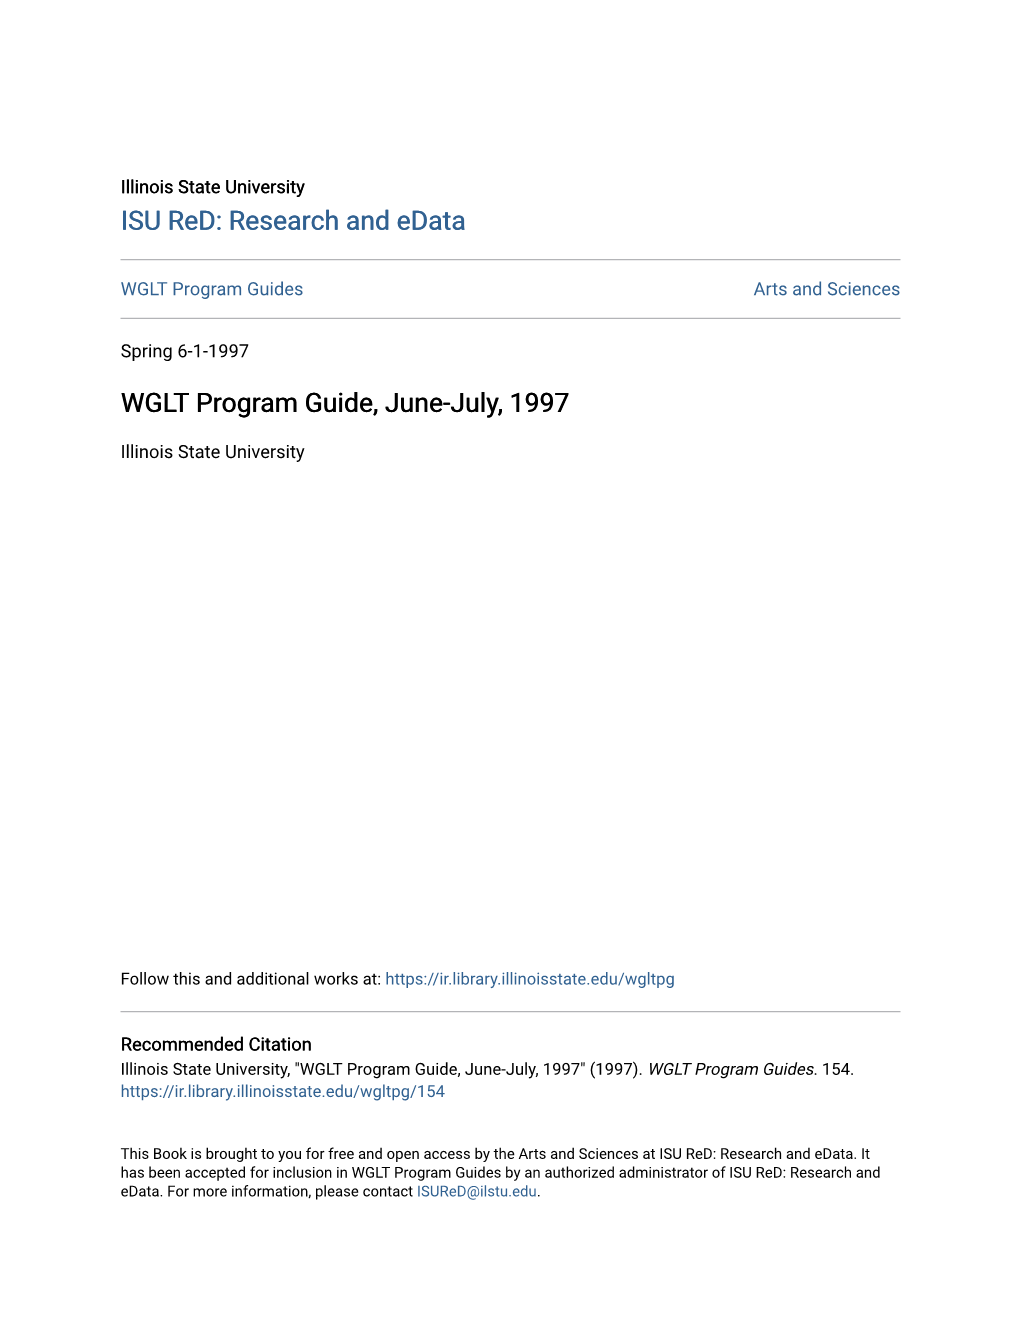 WGLT Program Guide, June-July, 1997